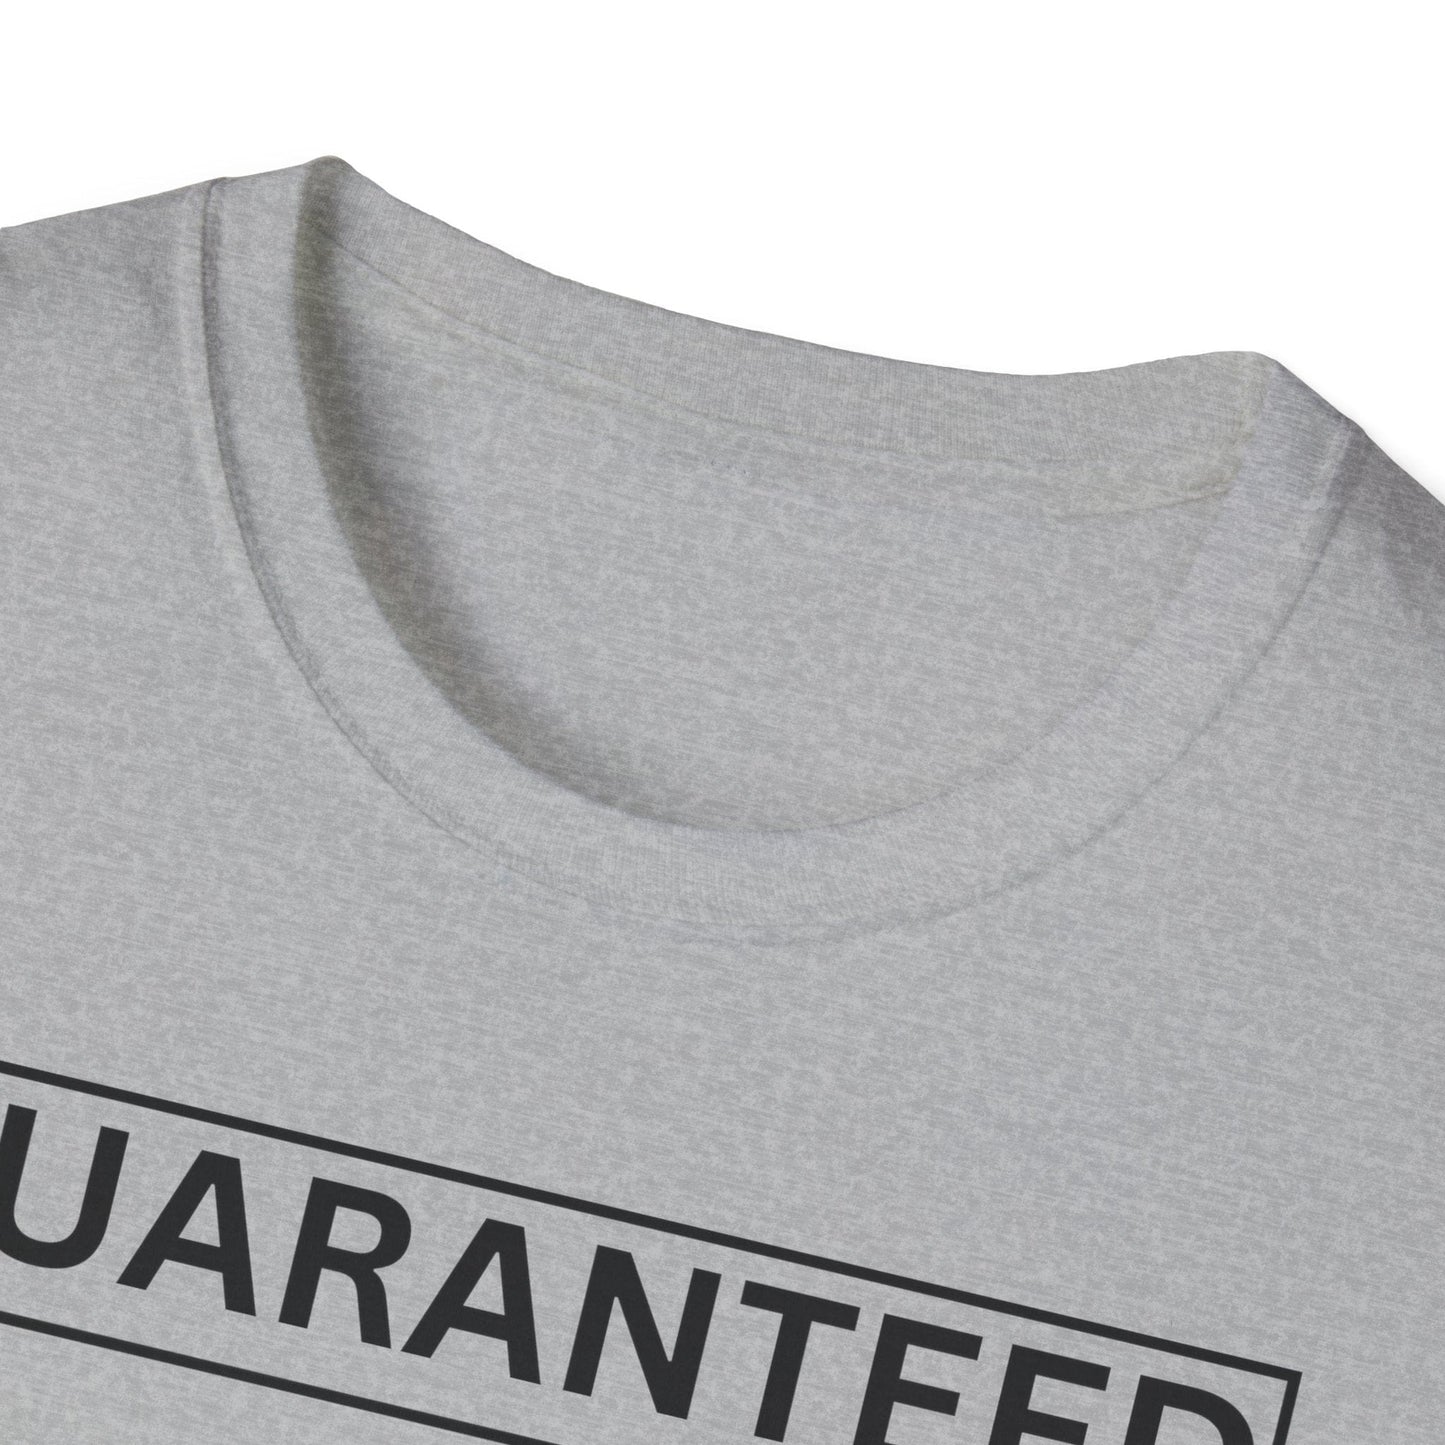 
                  
                    T-Shirt Guaranteed fcuk parody T-Shirt INVI-Expressionwear
                  
                